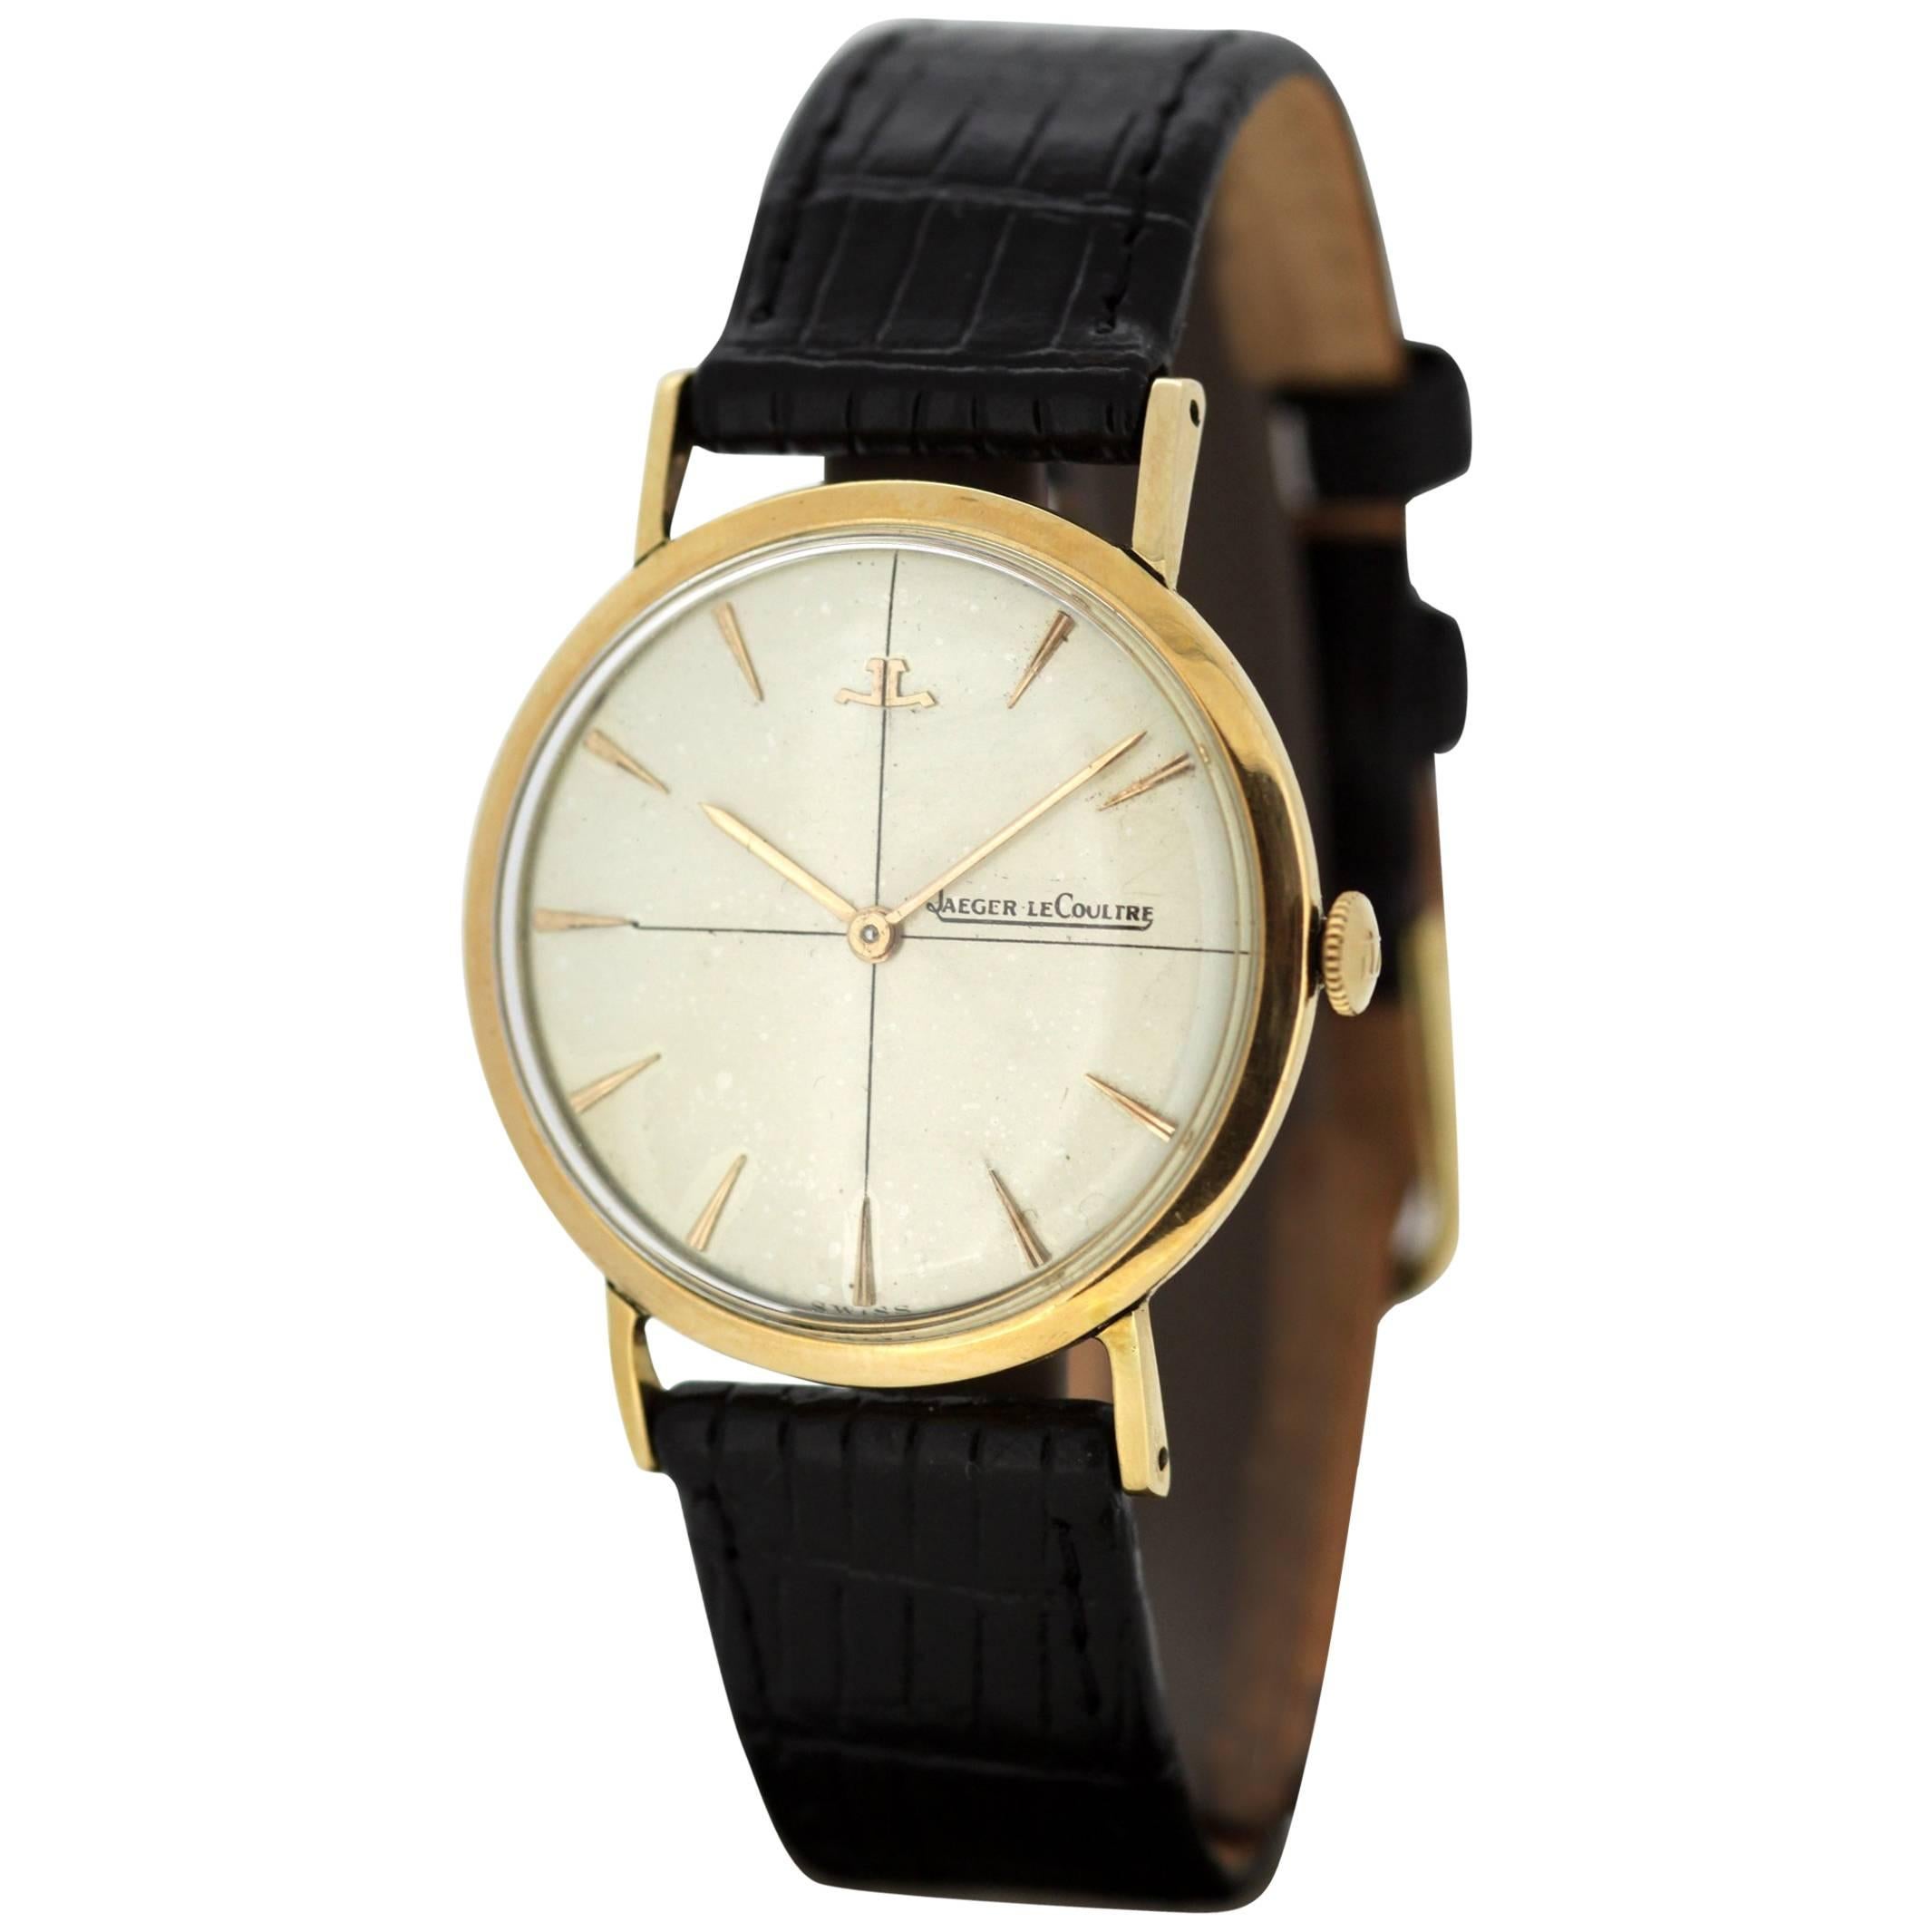 Jaeger-LeCoultre Vintage 18 Karat Gold Manual Winding Wristwatch, circa 1960s